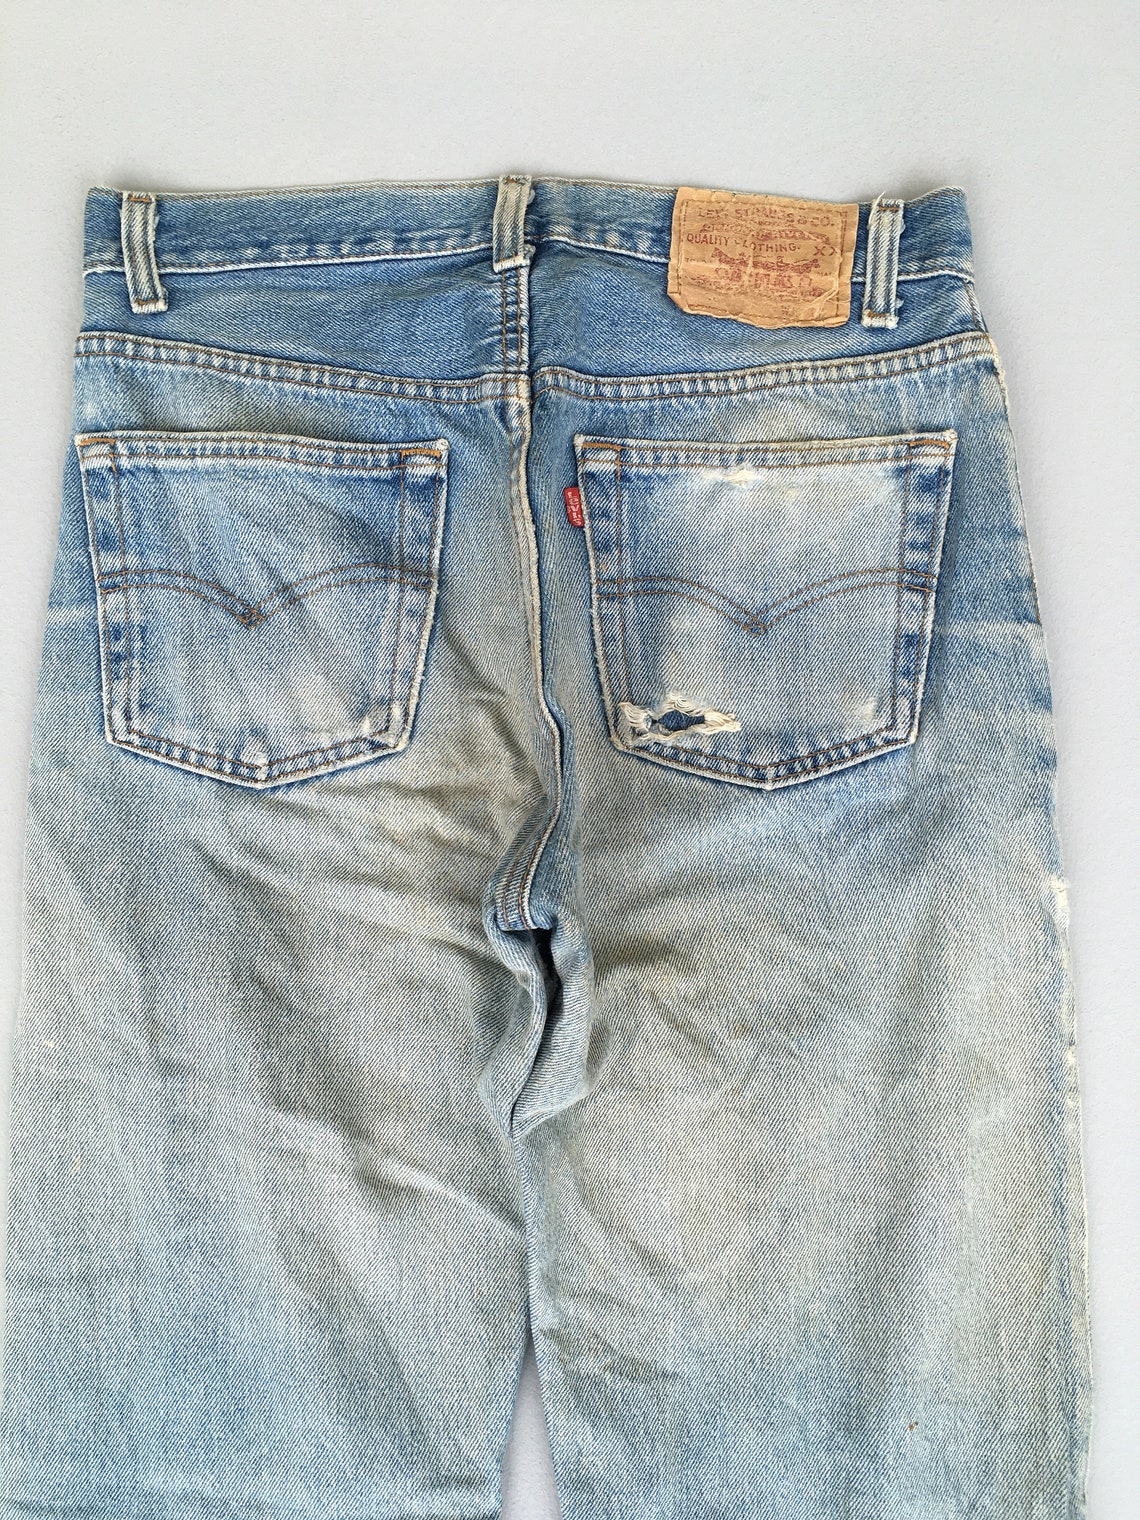 Size 28x29 Vintage Levis 501 Ripped Denim Light Washed Jeans | Etsy